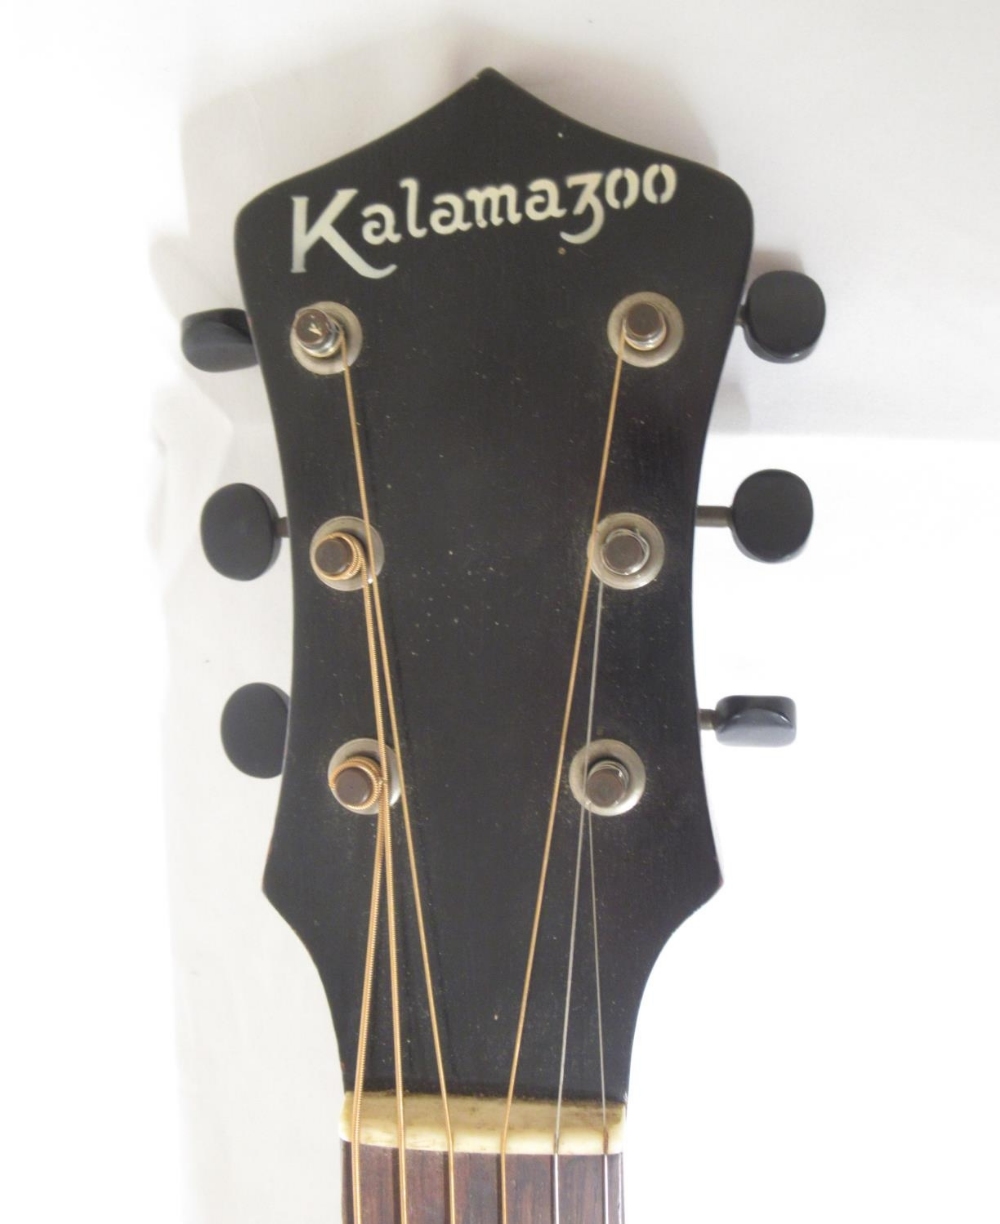 WITHDRAWN Kalamazoo by Gibson circa 1940s 6 string acoustic guitar, lacking Gibson sticker, serial n - Bild 3 aus 9